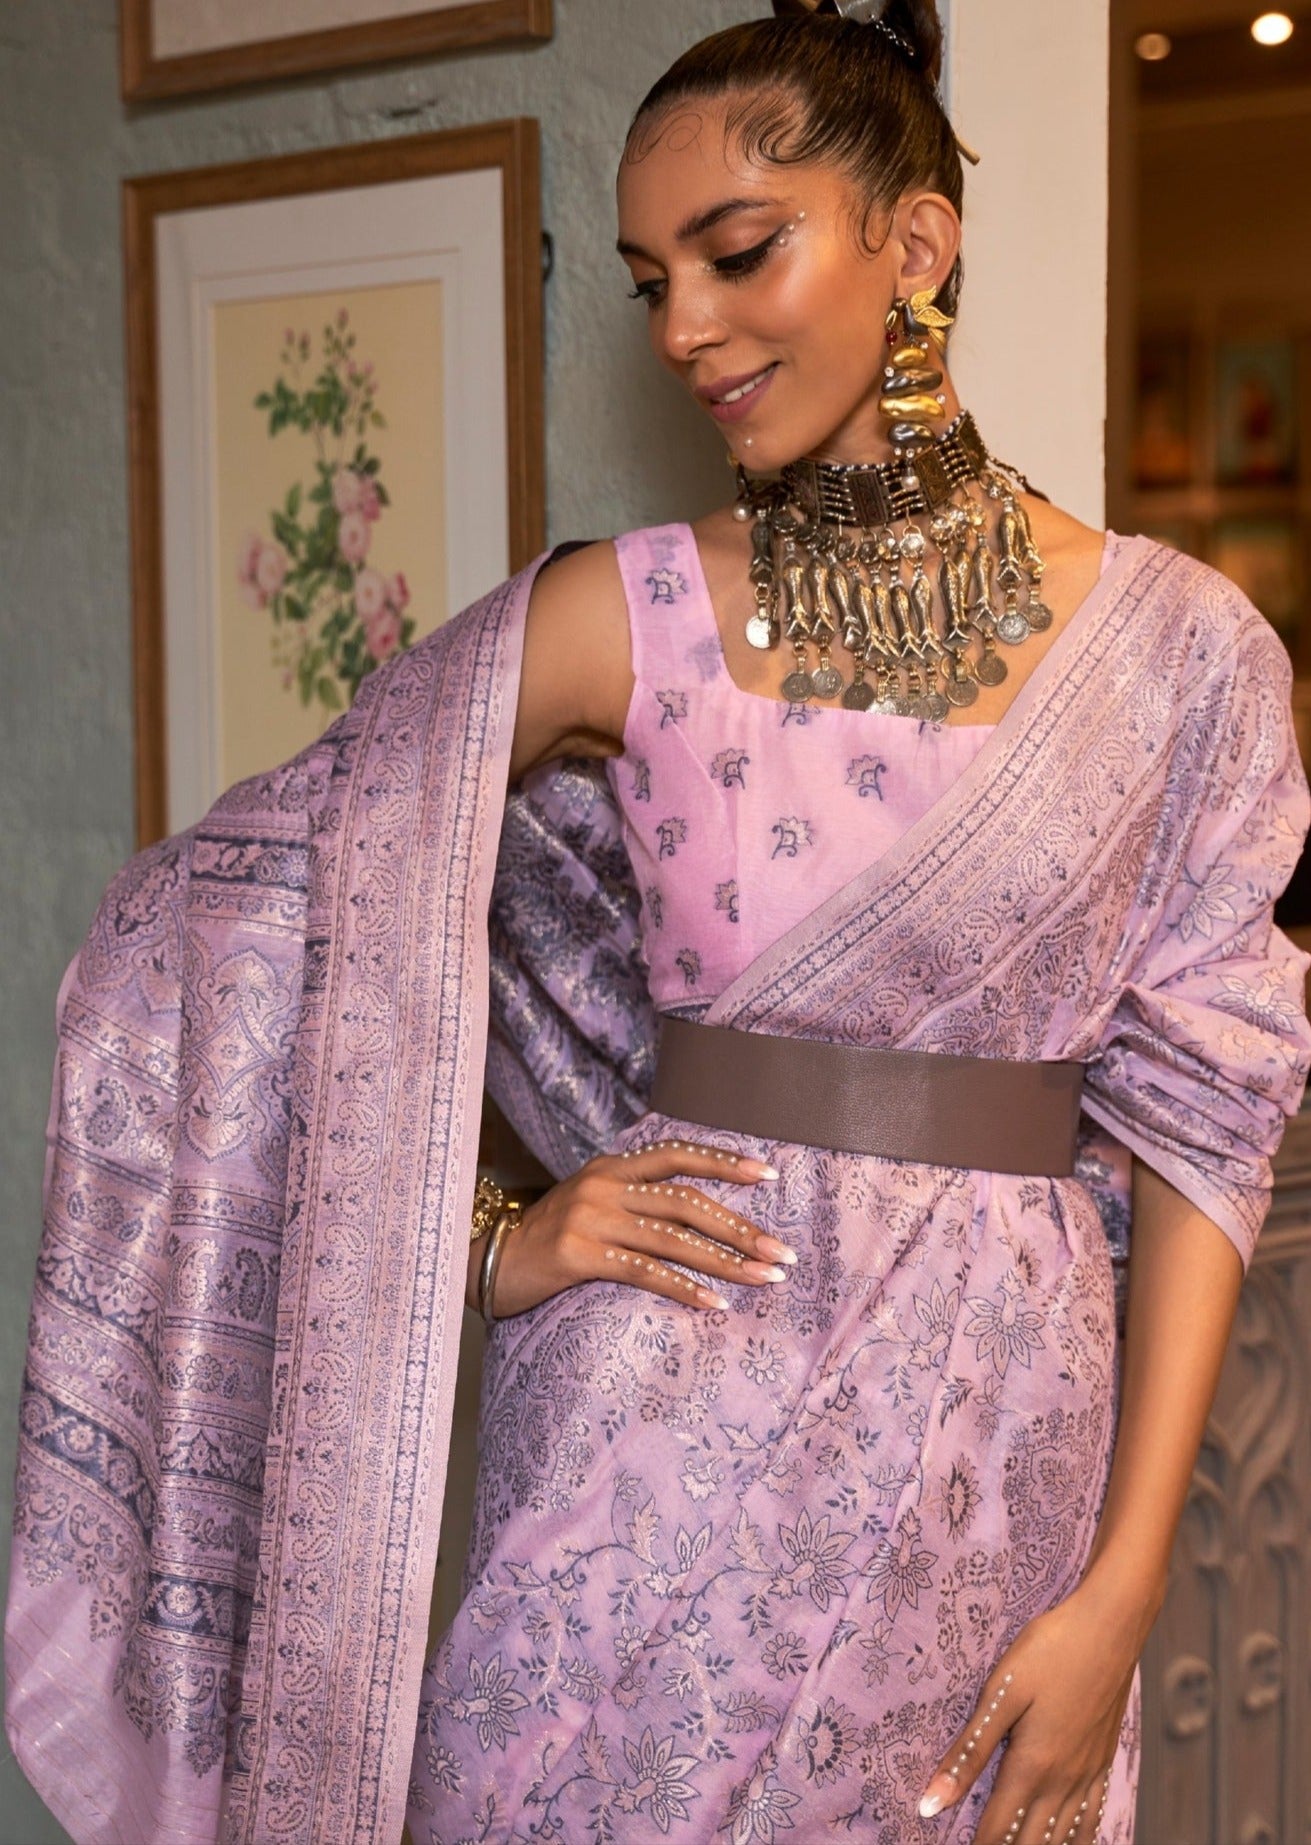 Woman in pink kashmiri saree smiling